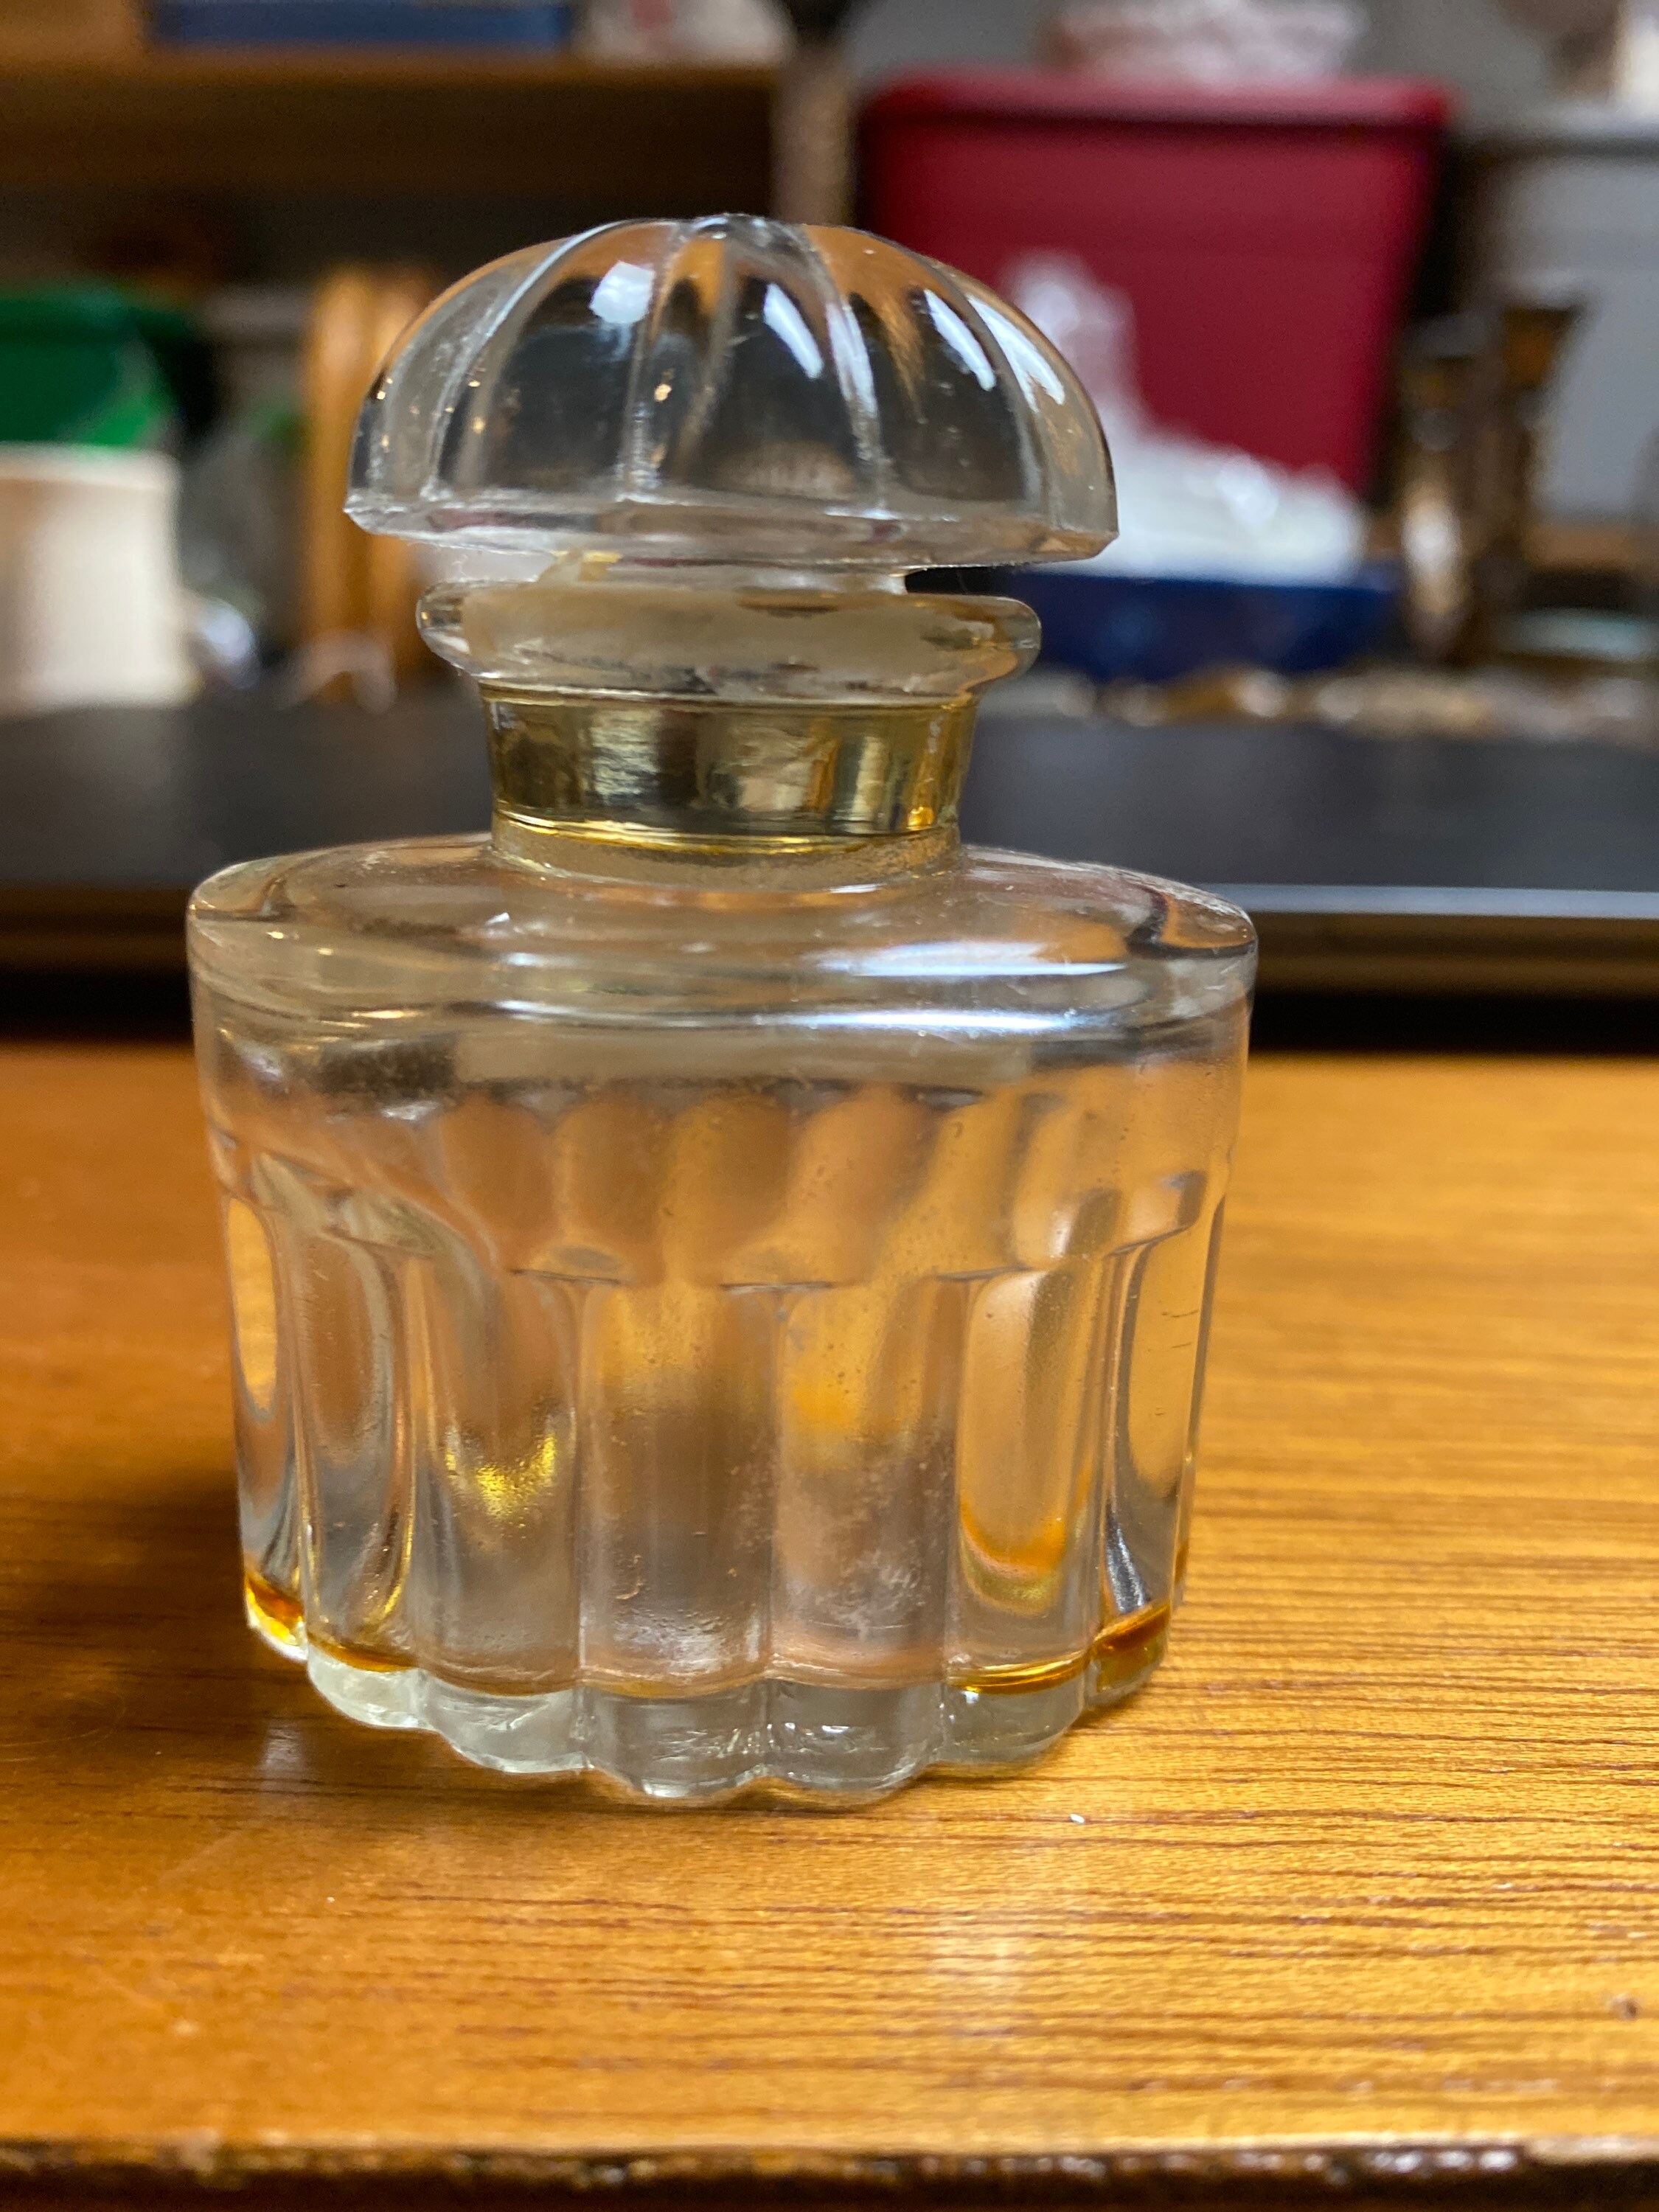 Balenciaga Le Dix Mini Perfume Bottle Vintage – Estatebeads